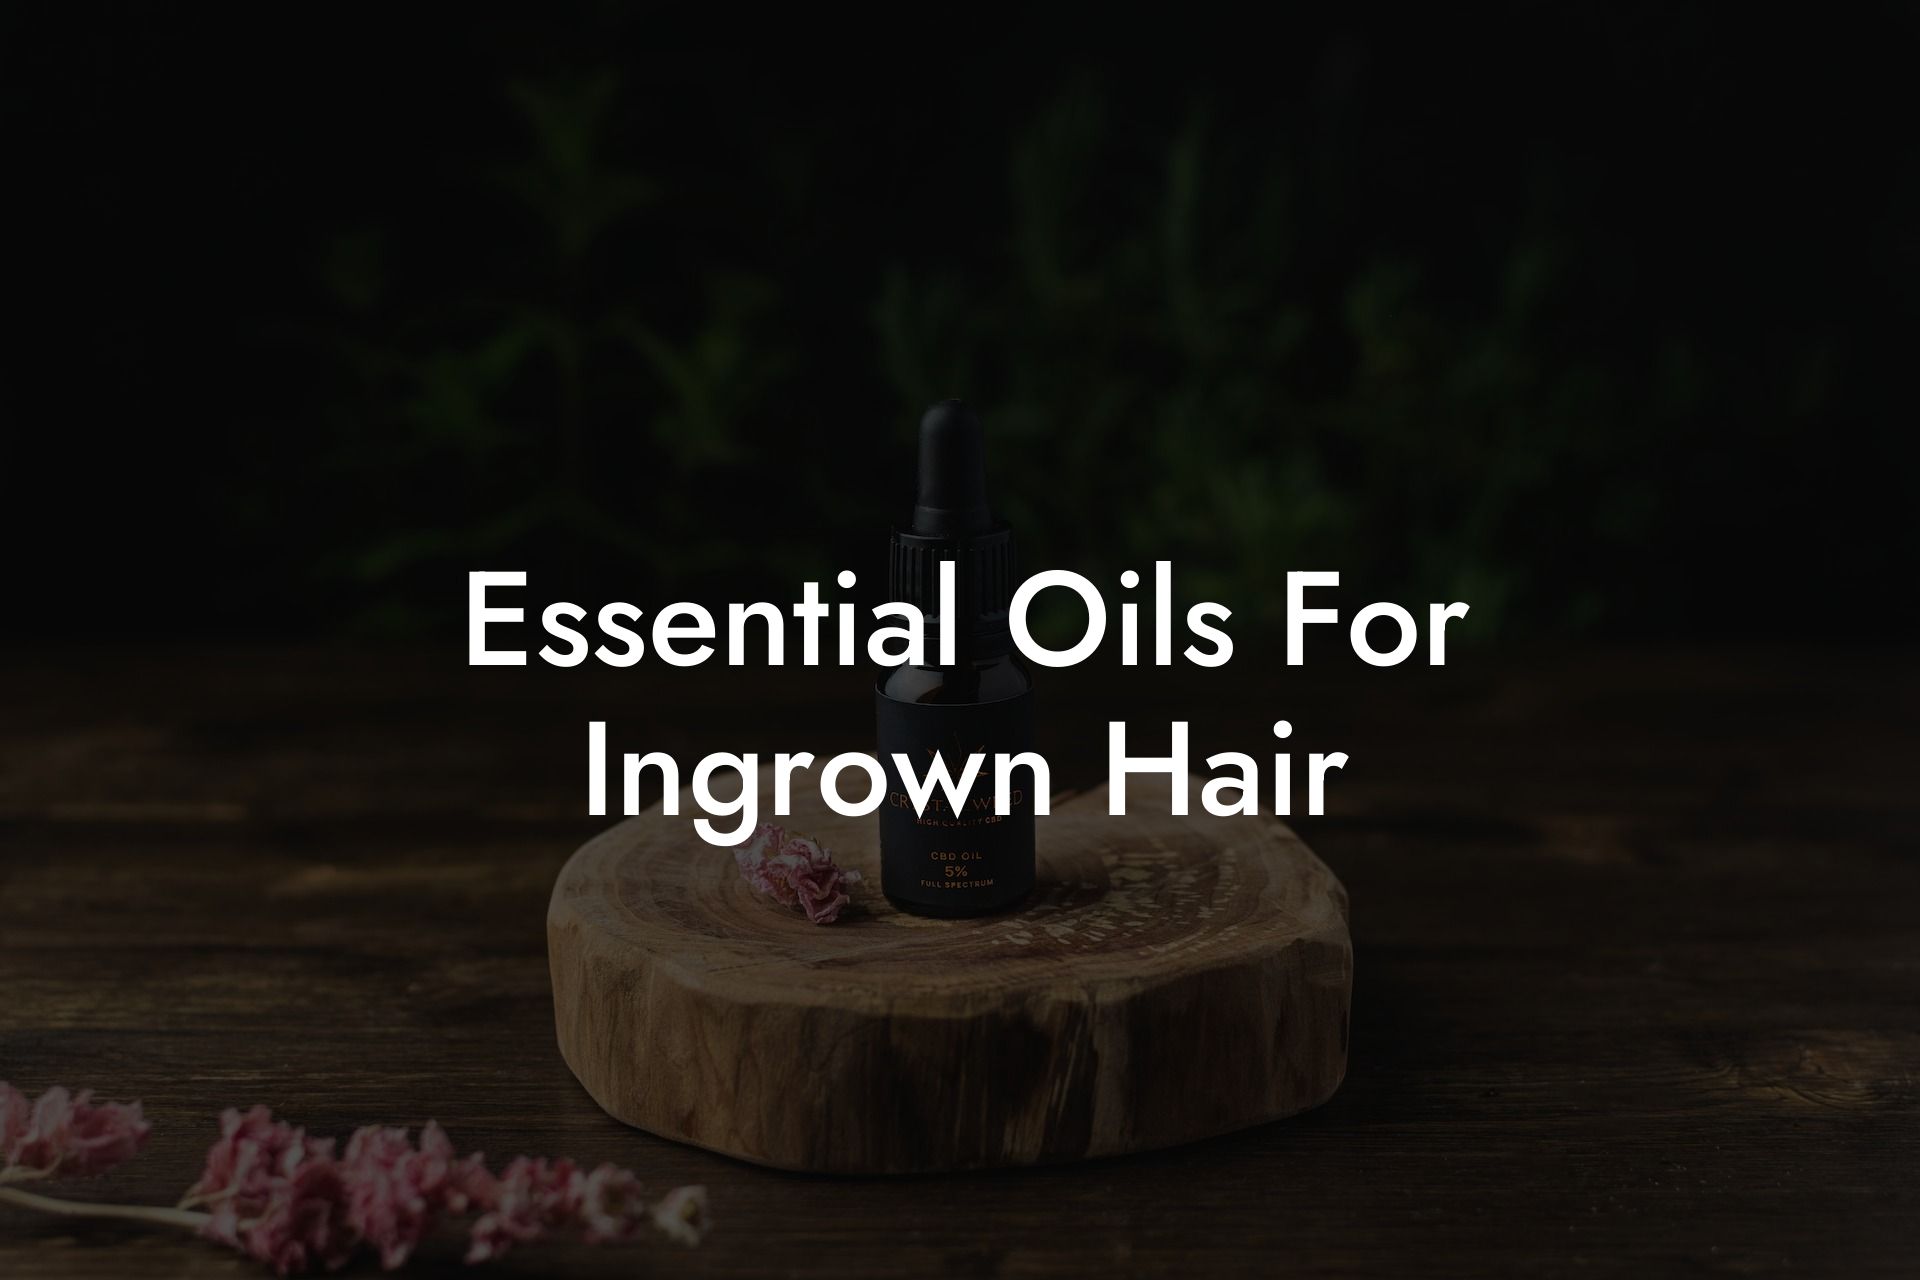 Essential Oils For Ingrown Hair